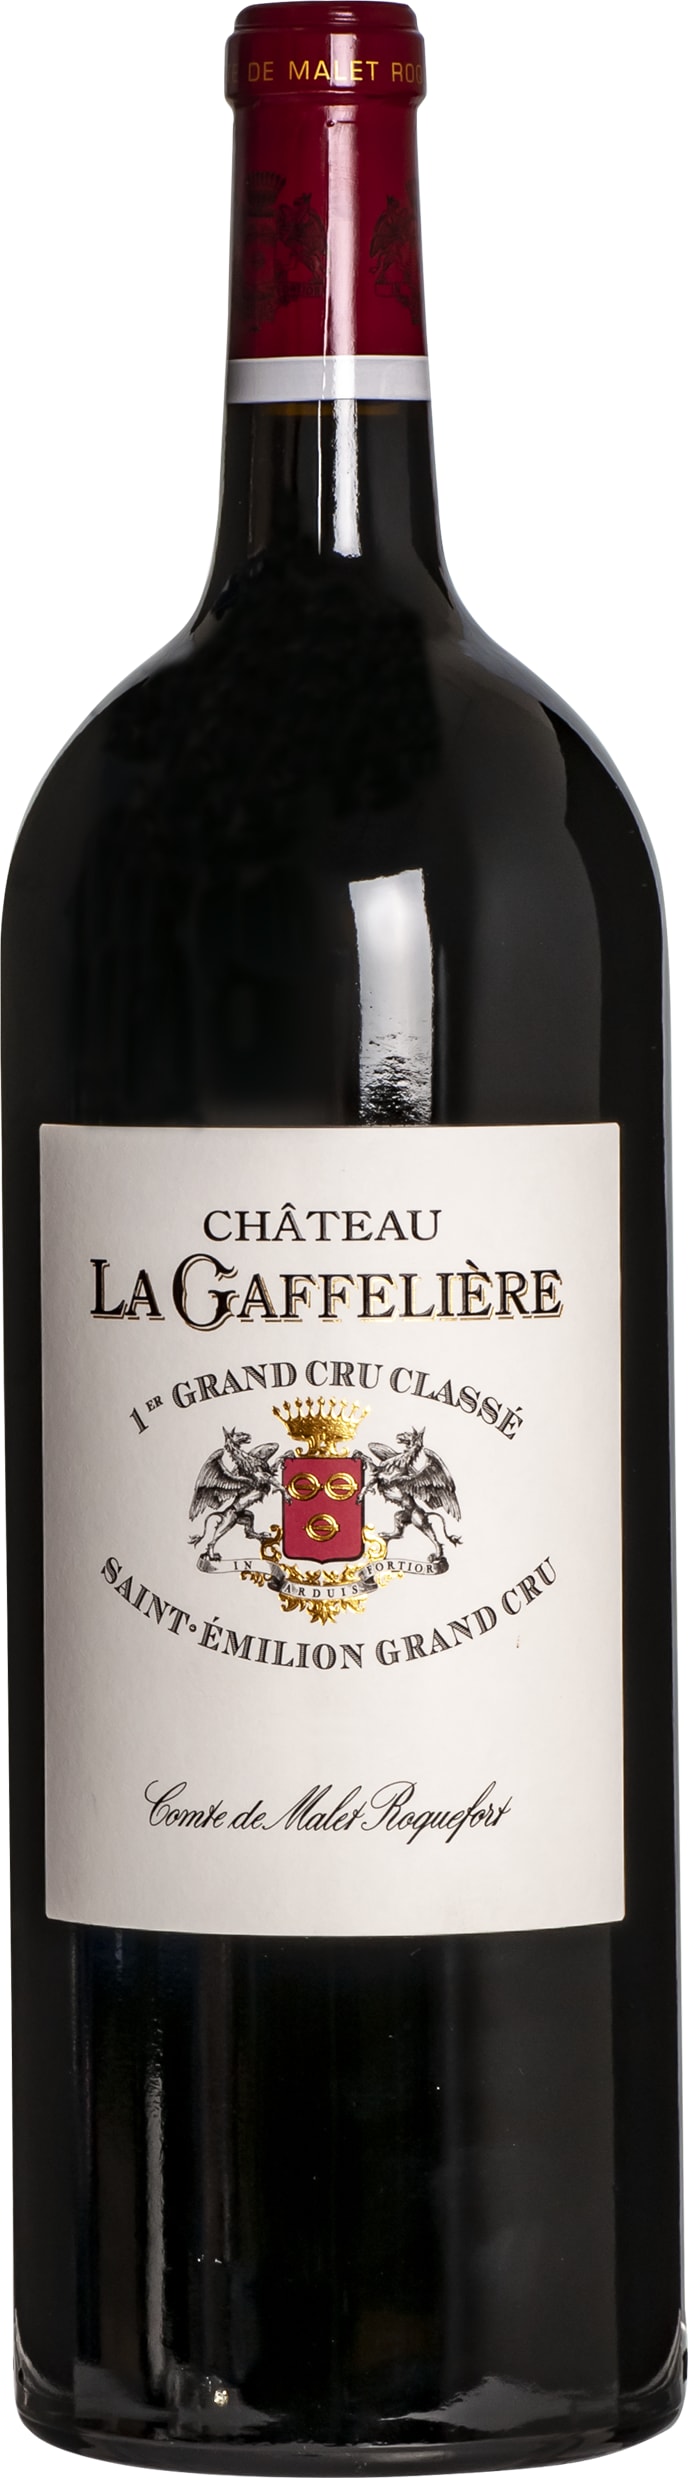 Chateau La Gaffeliere Saint Emilion Premier Grand Cru Classe Magnum 2016 150cl - Buy Chateau La Gaffeliere Wines from GREAT WINES DIRECT wine shop